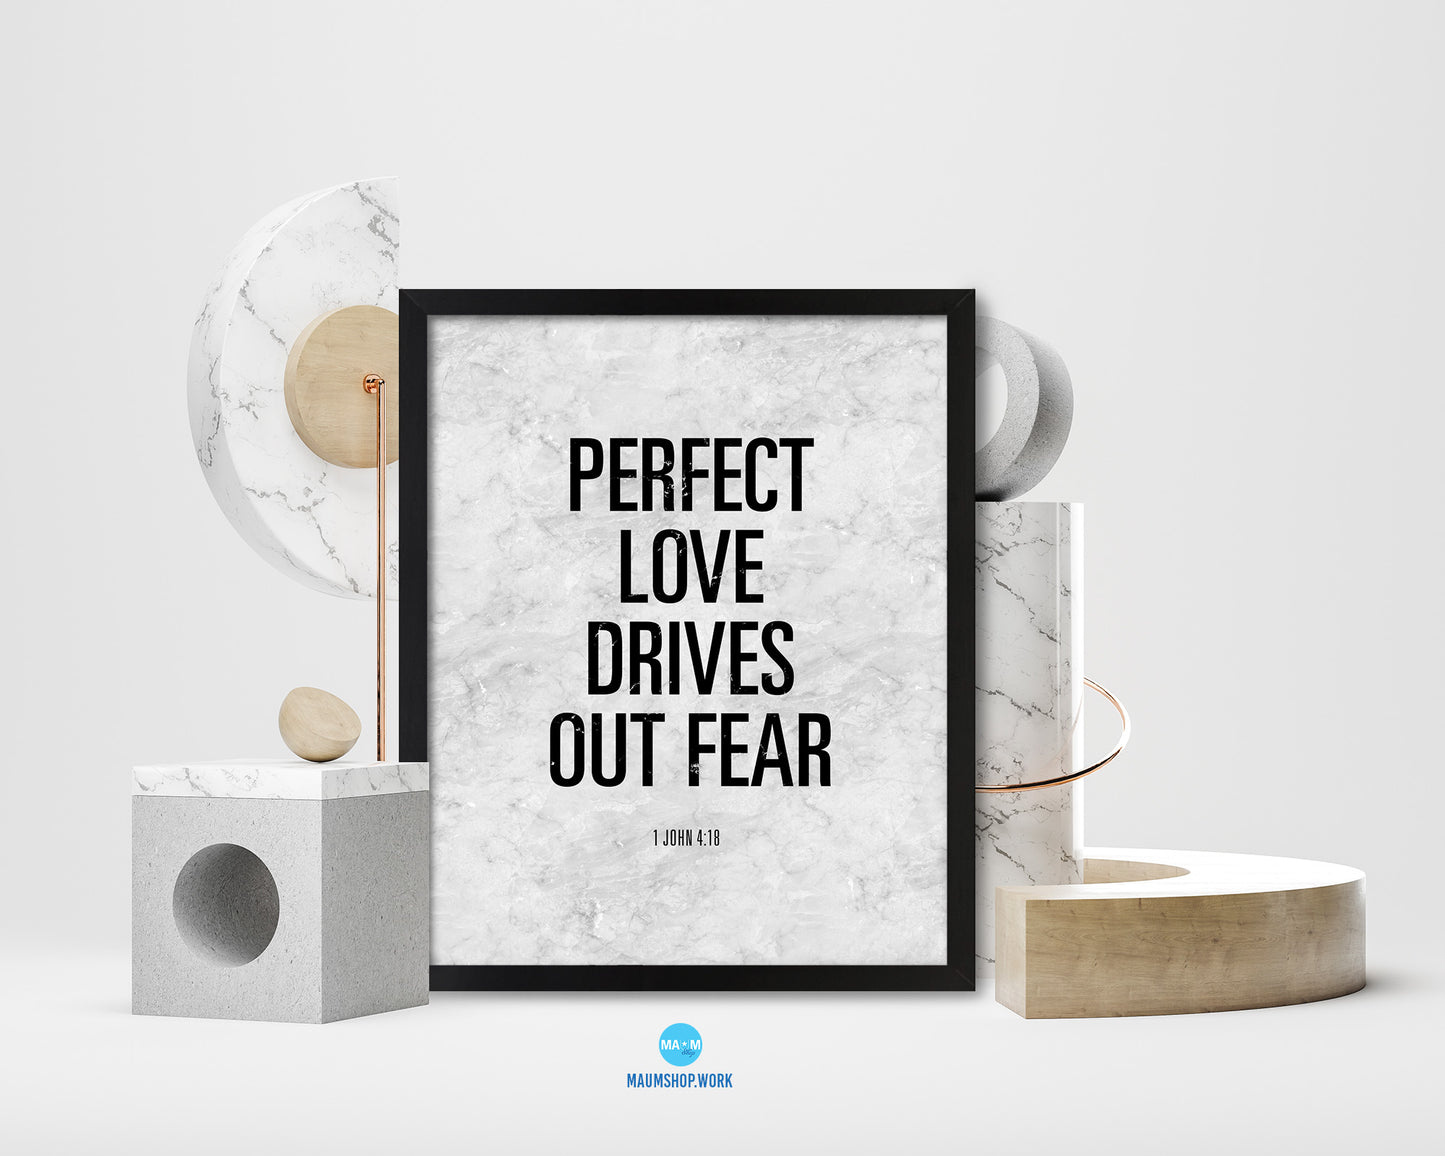 Perfect love drives out fear, 1 John 4:18 Bible Scripture Verse Framed Print Wall Art Decor Gifts